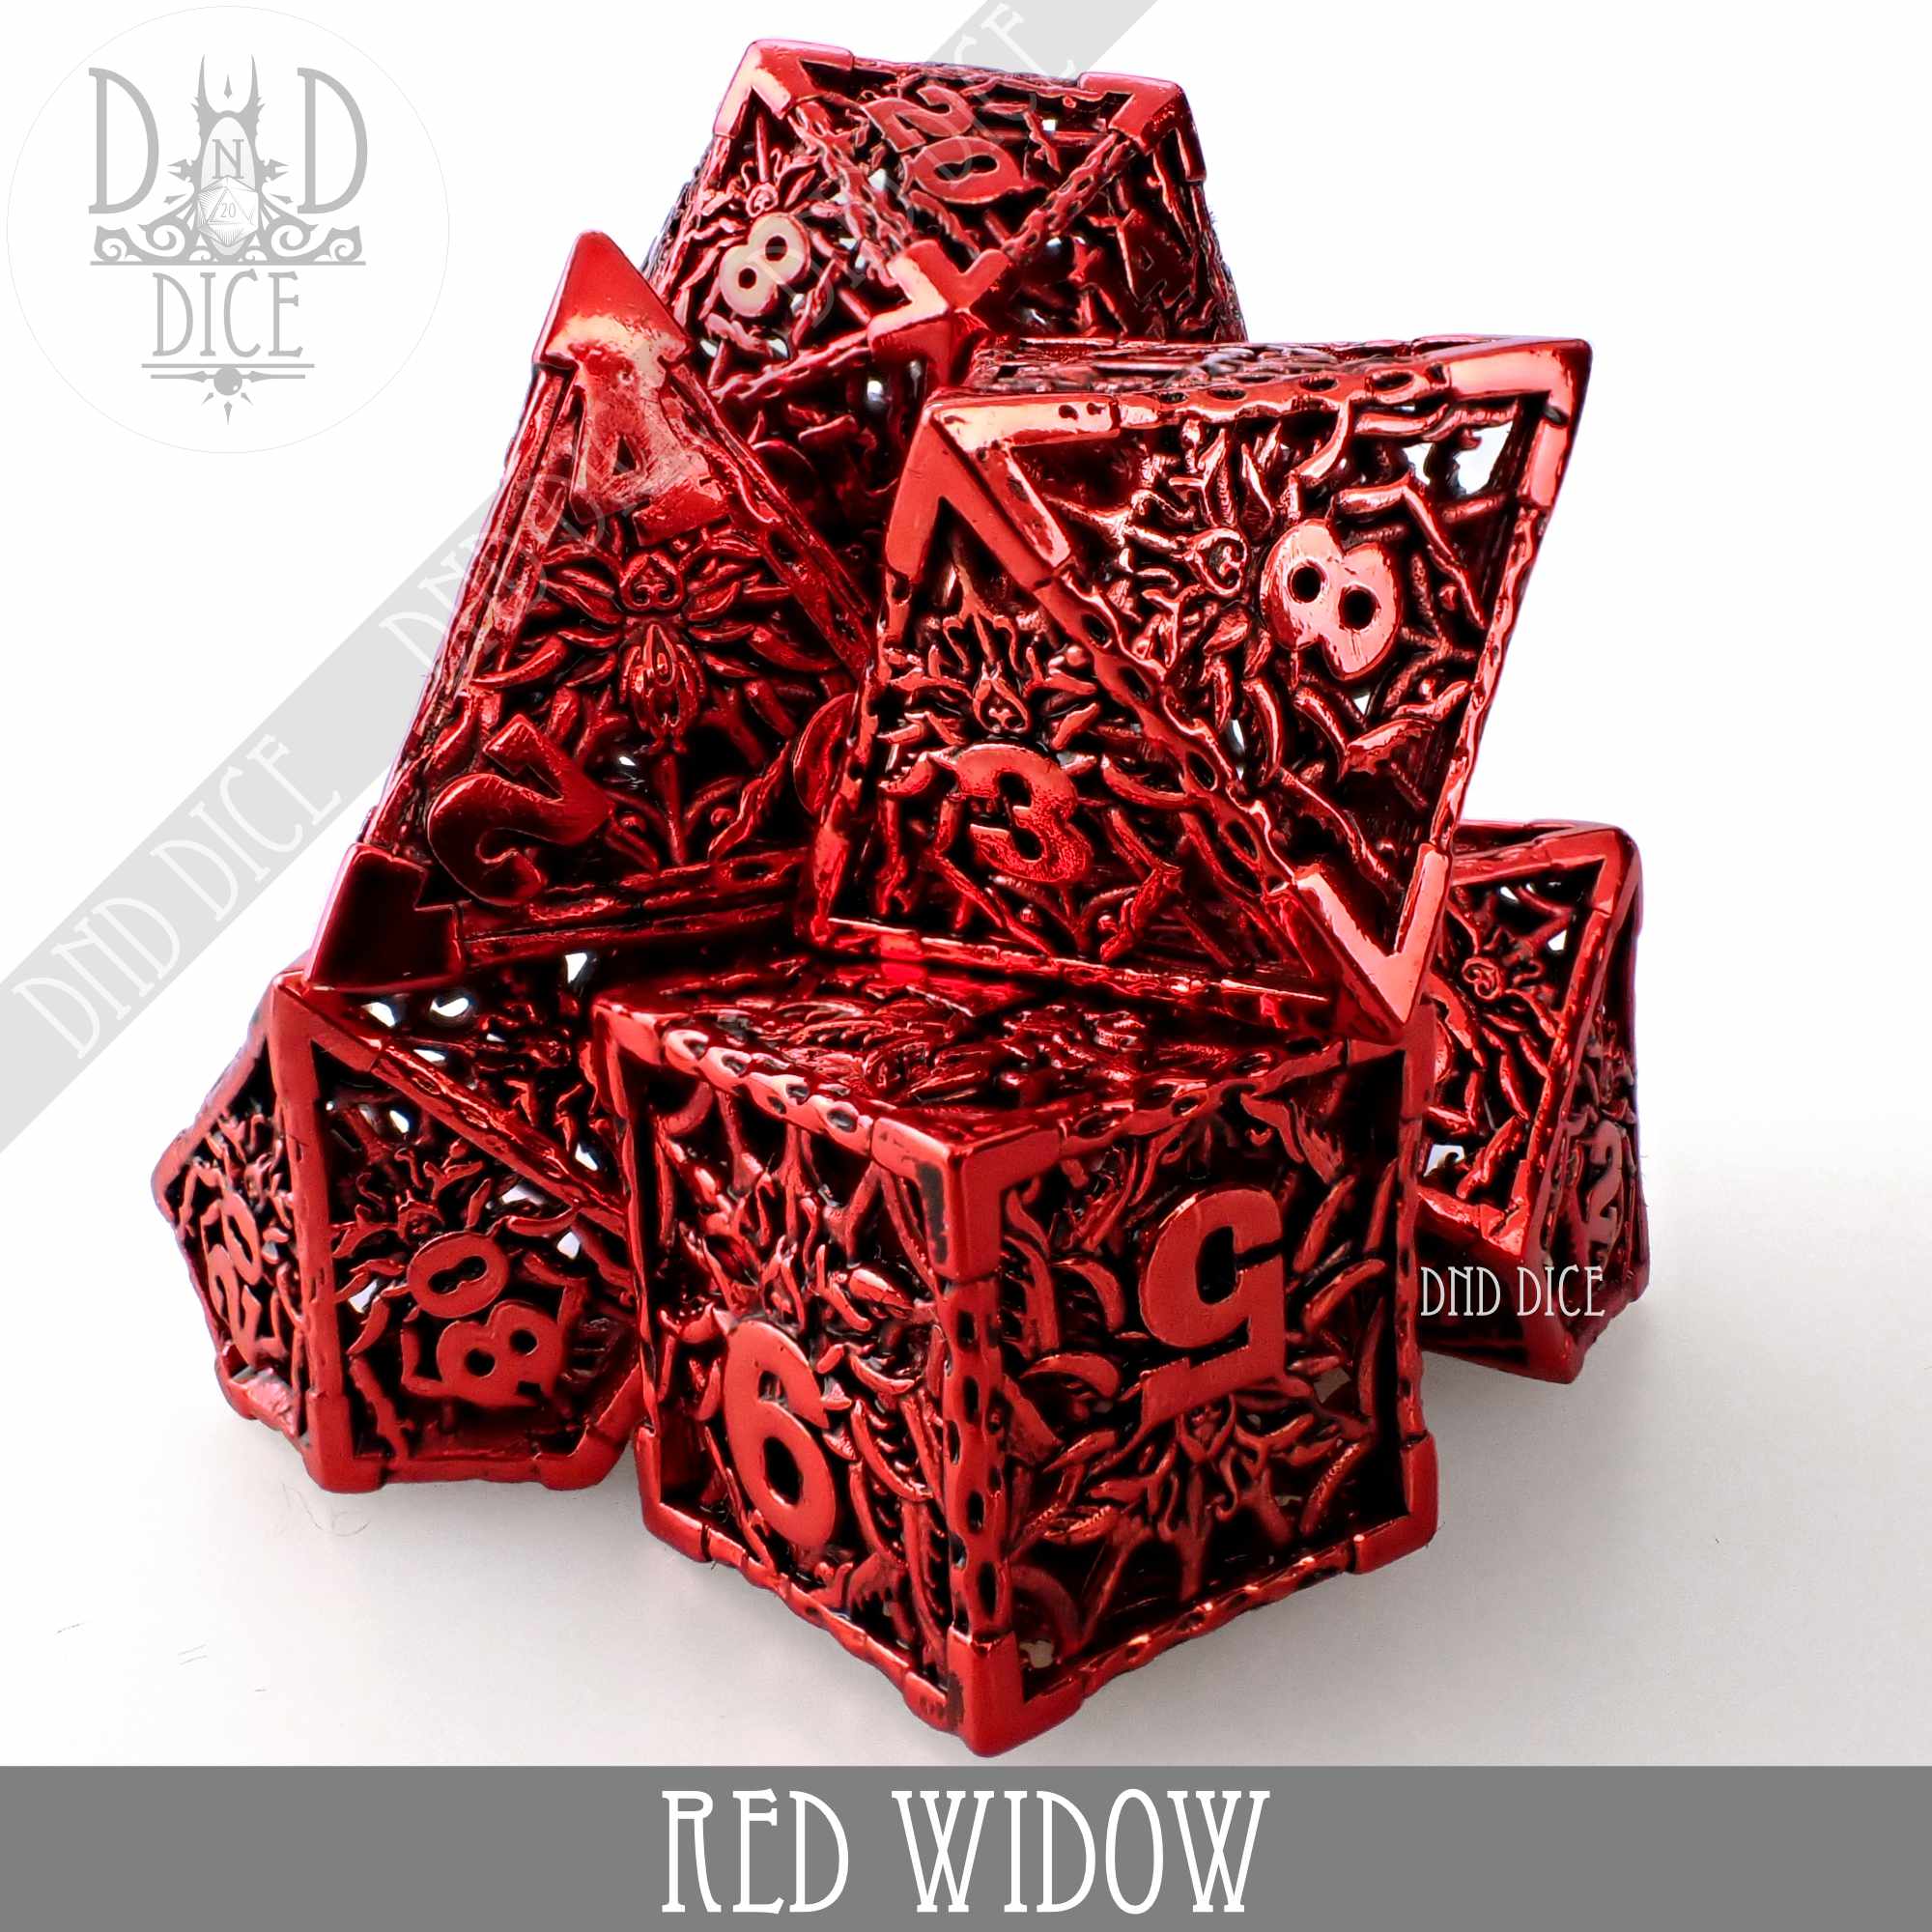 Red Widow Metal Dice Set (Gift Box)